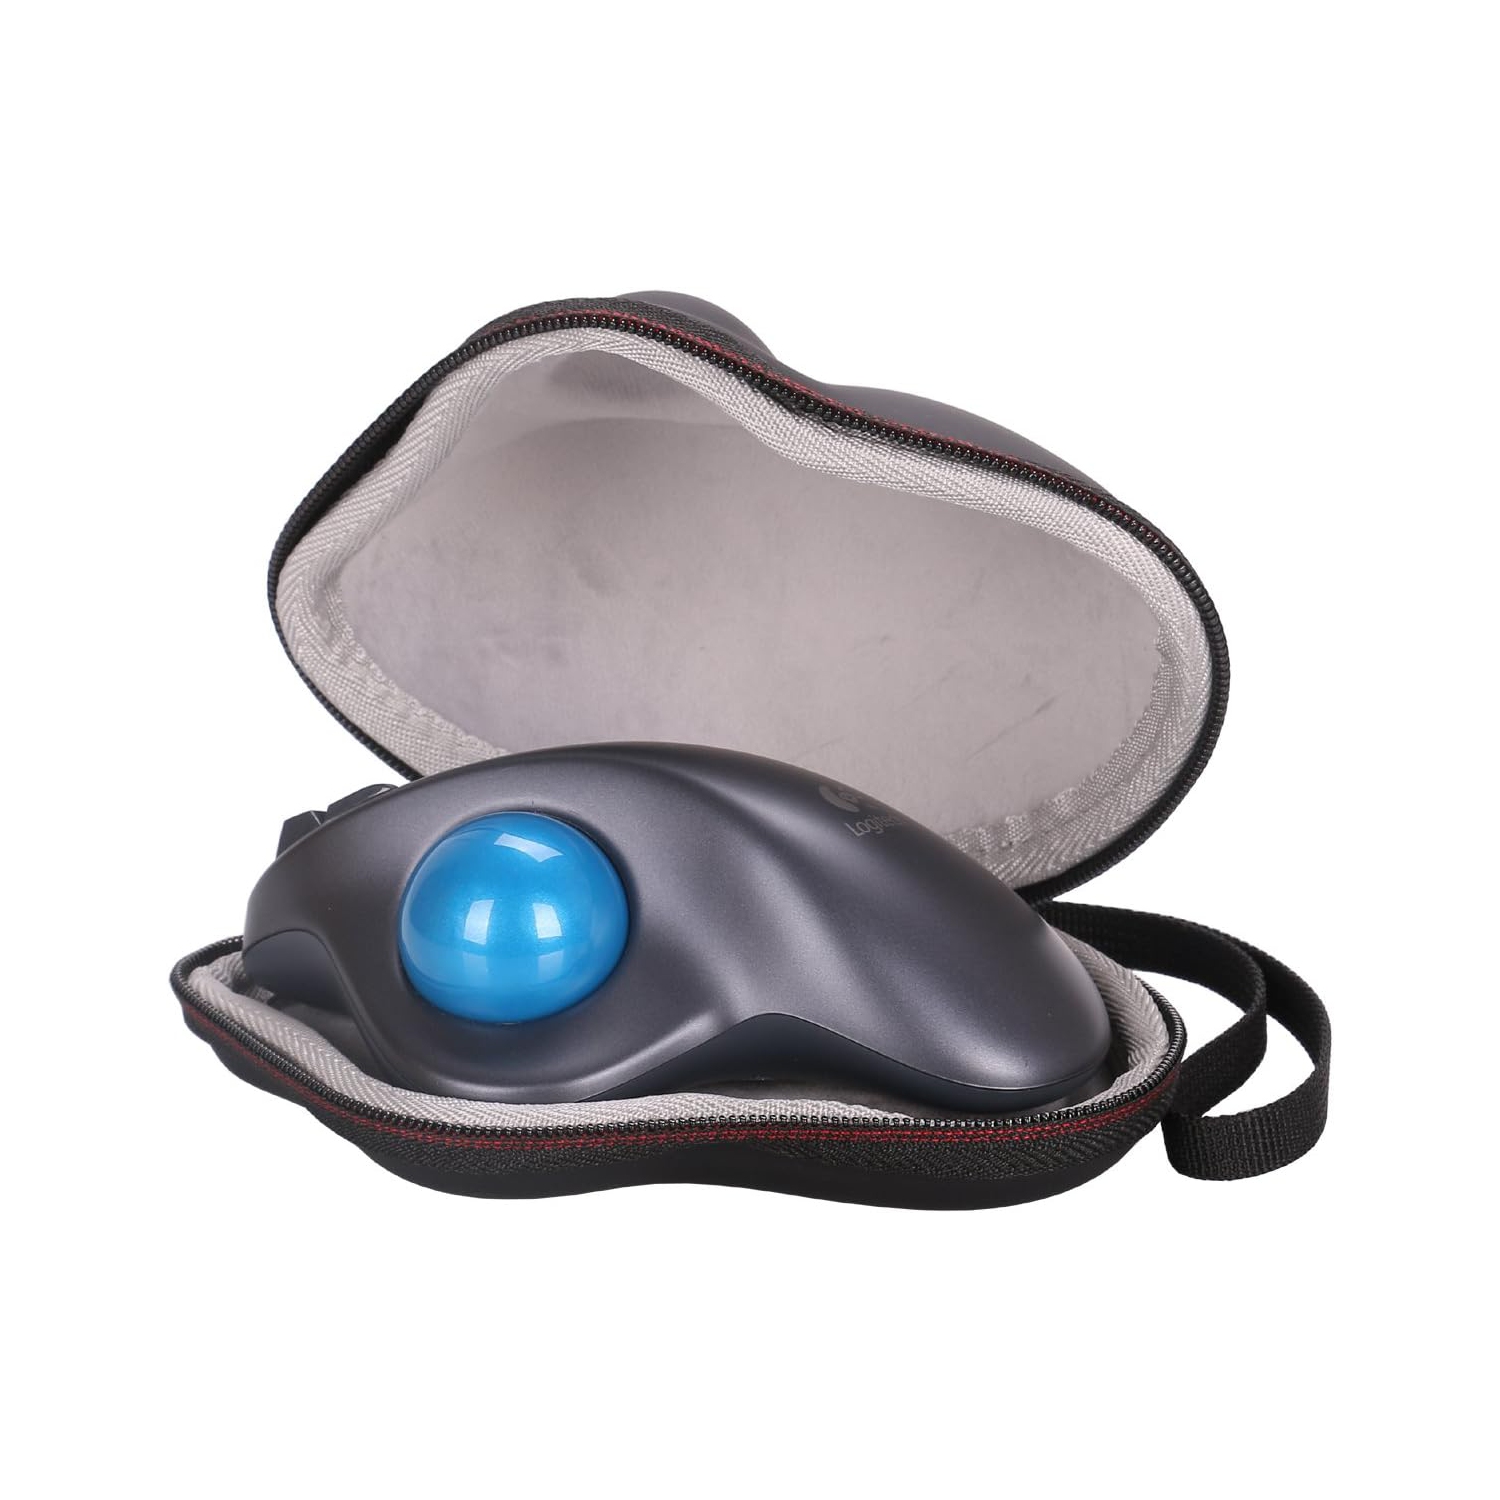 L EVA Hard Protective Case Travel Carrying Storage Bag for Logitech M570 Wireless Trackball